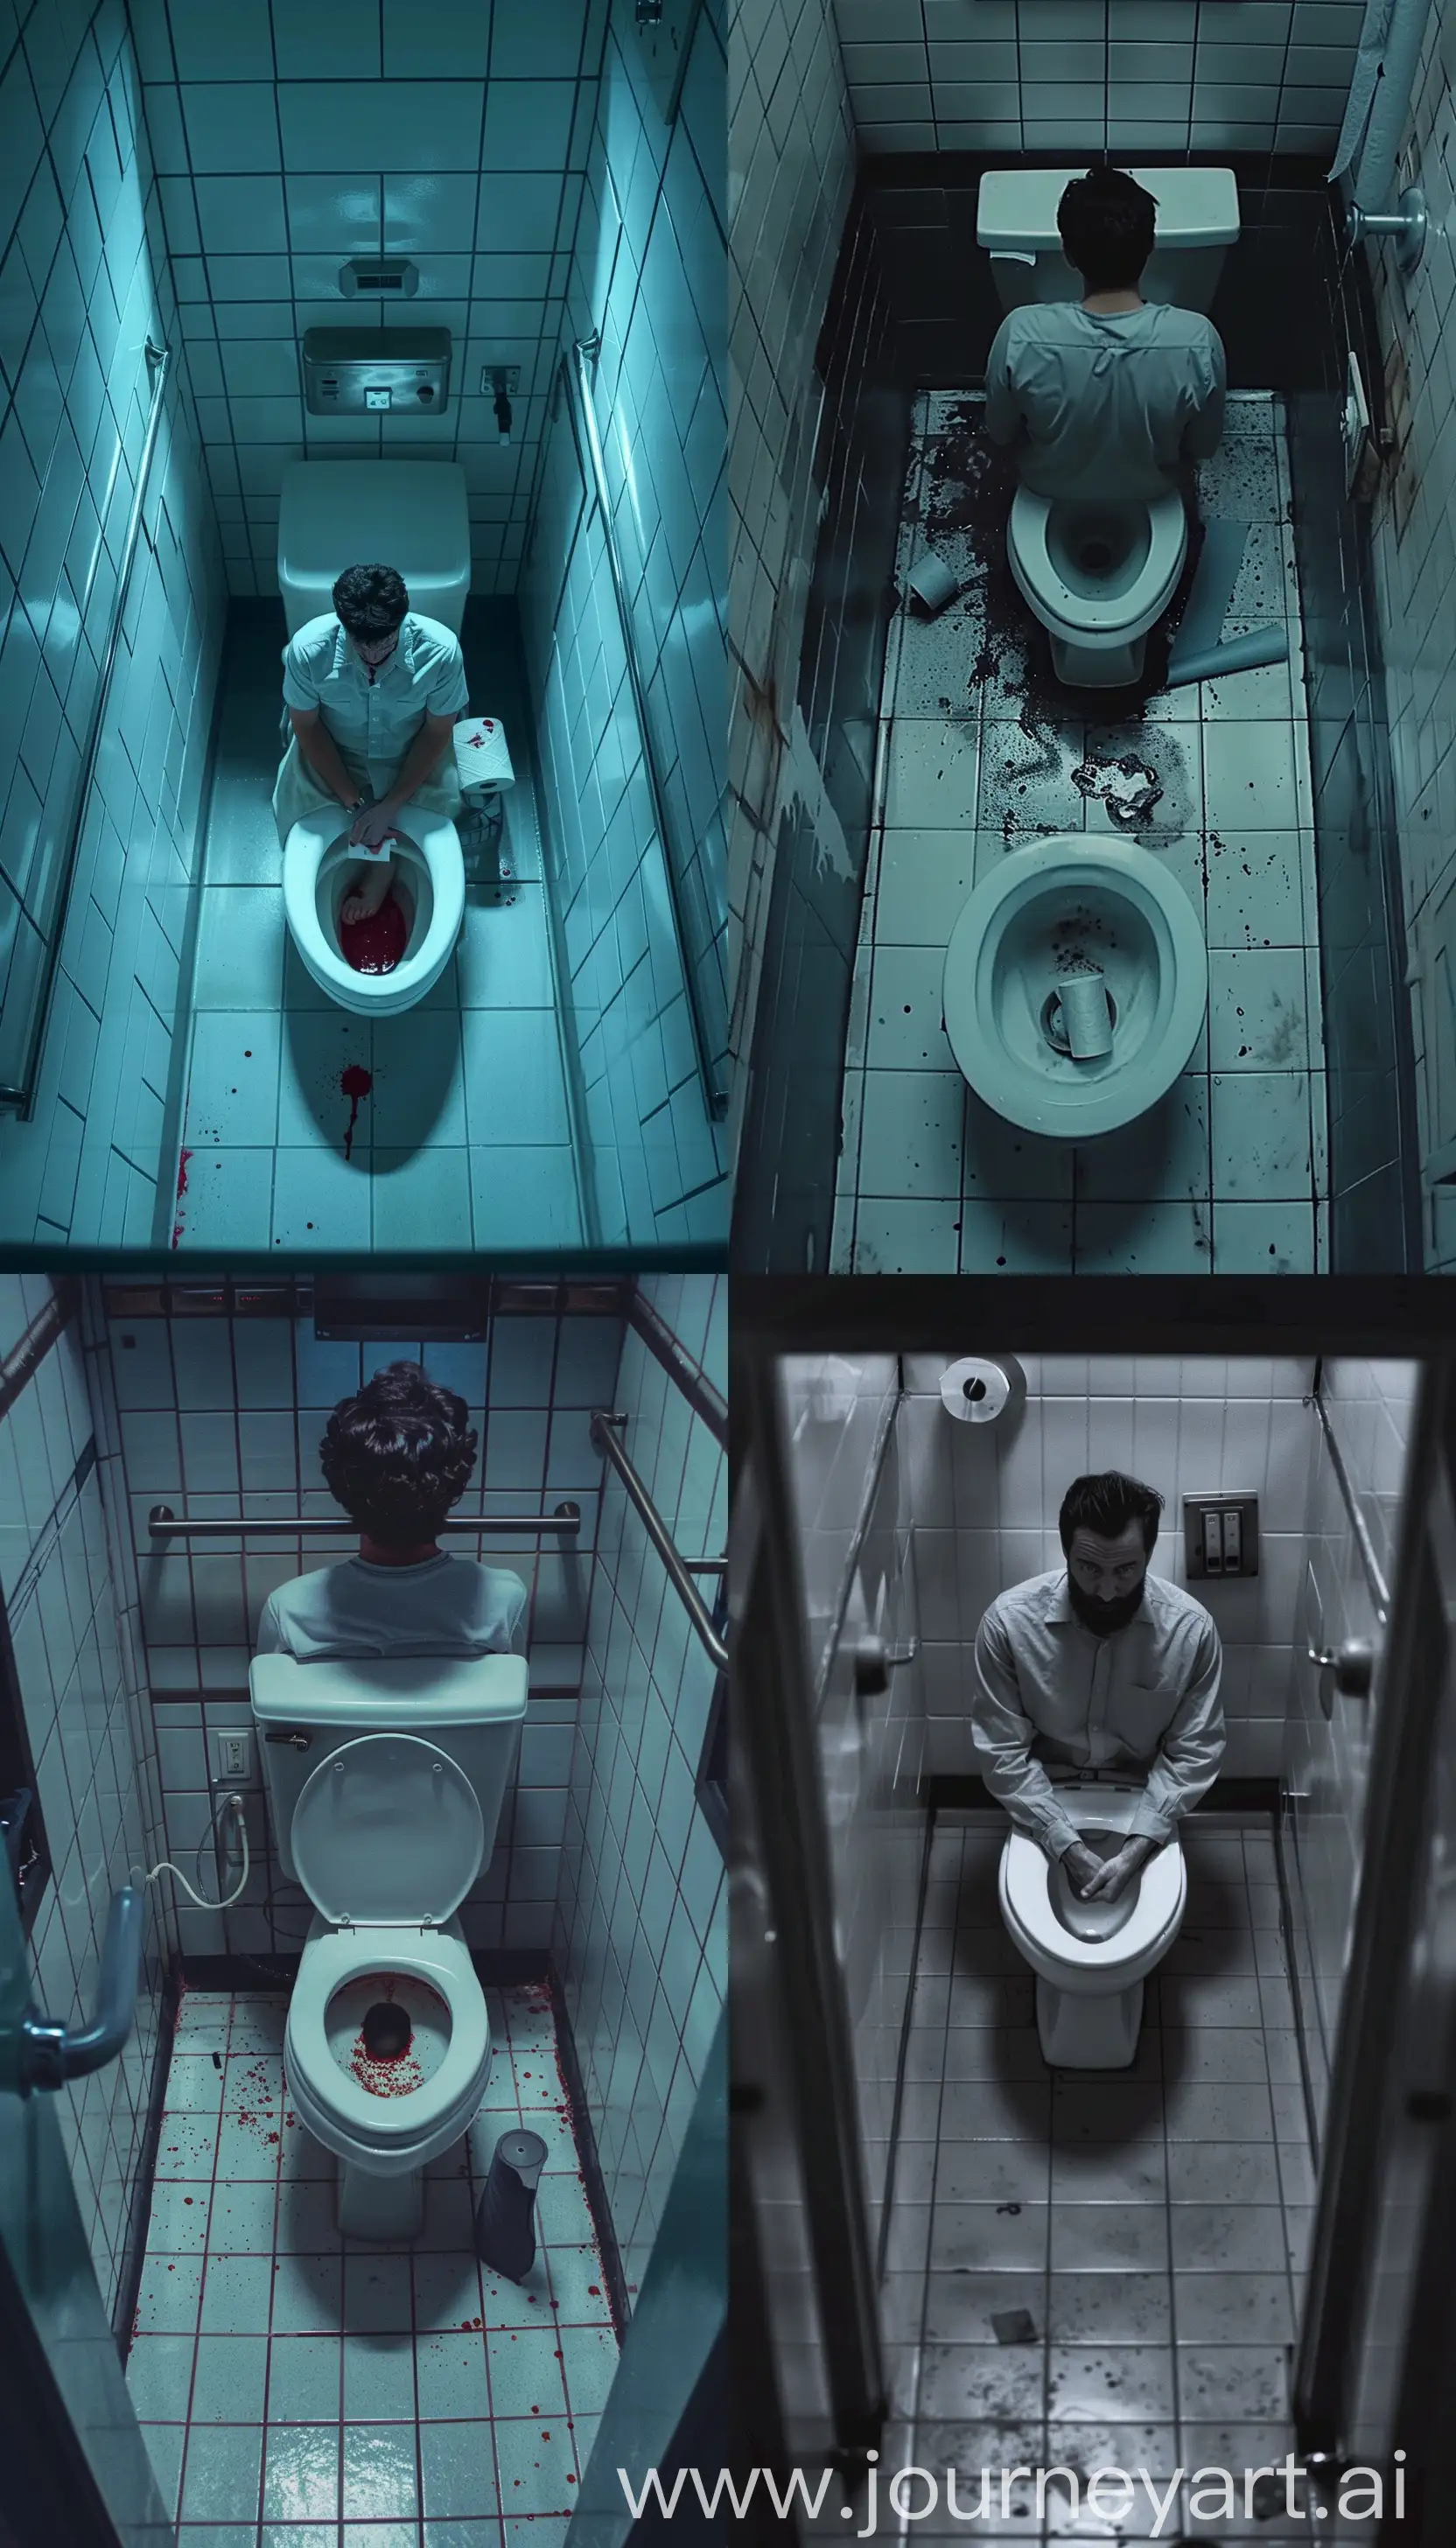 Man-in-School-Restroom-Discovers-Toilet-Paper-Shortage